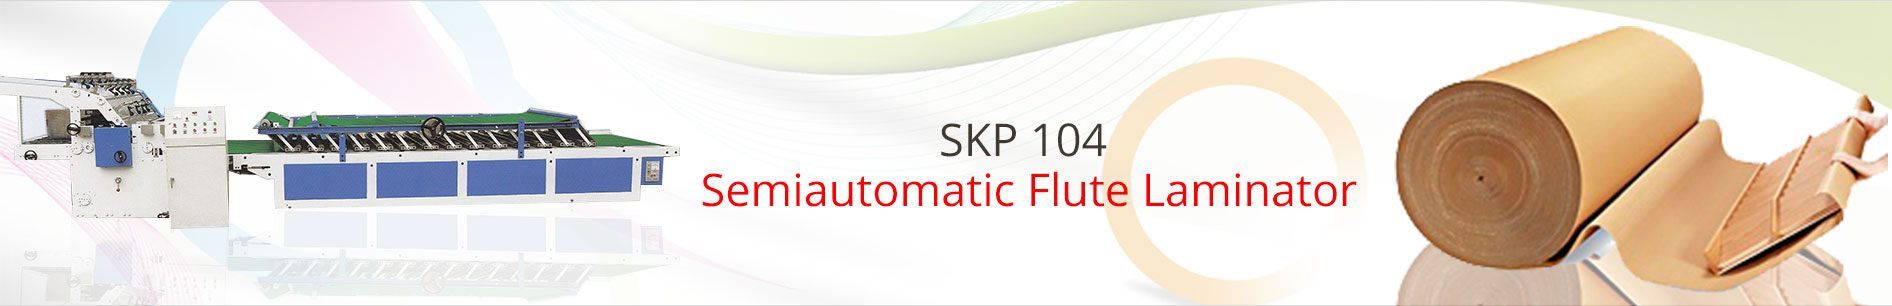 SKP-104-Semiautomatic-Flute-Laminator